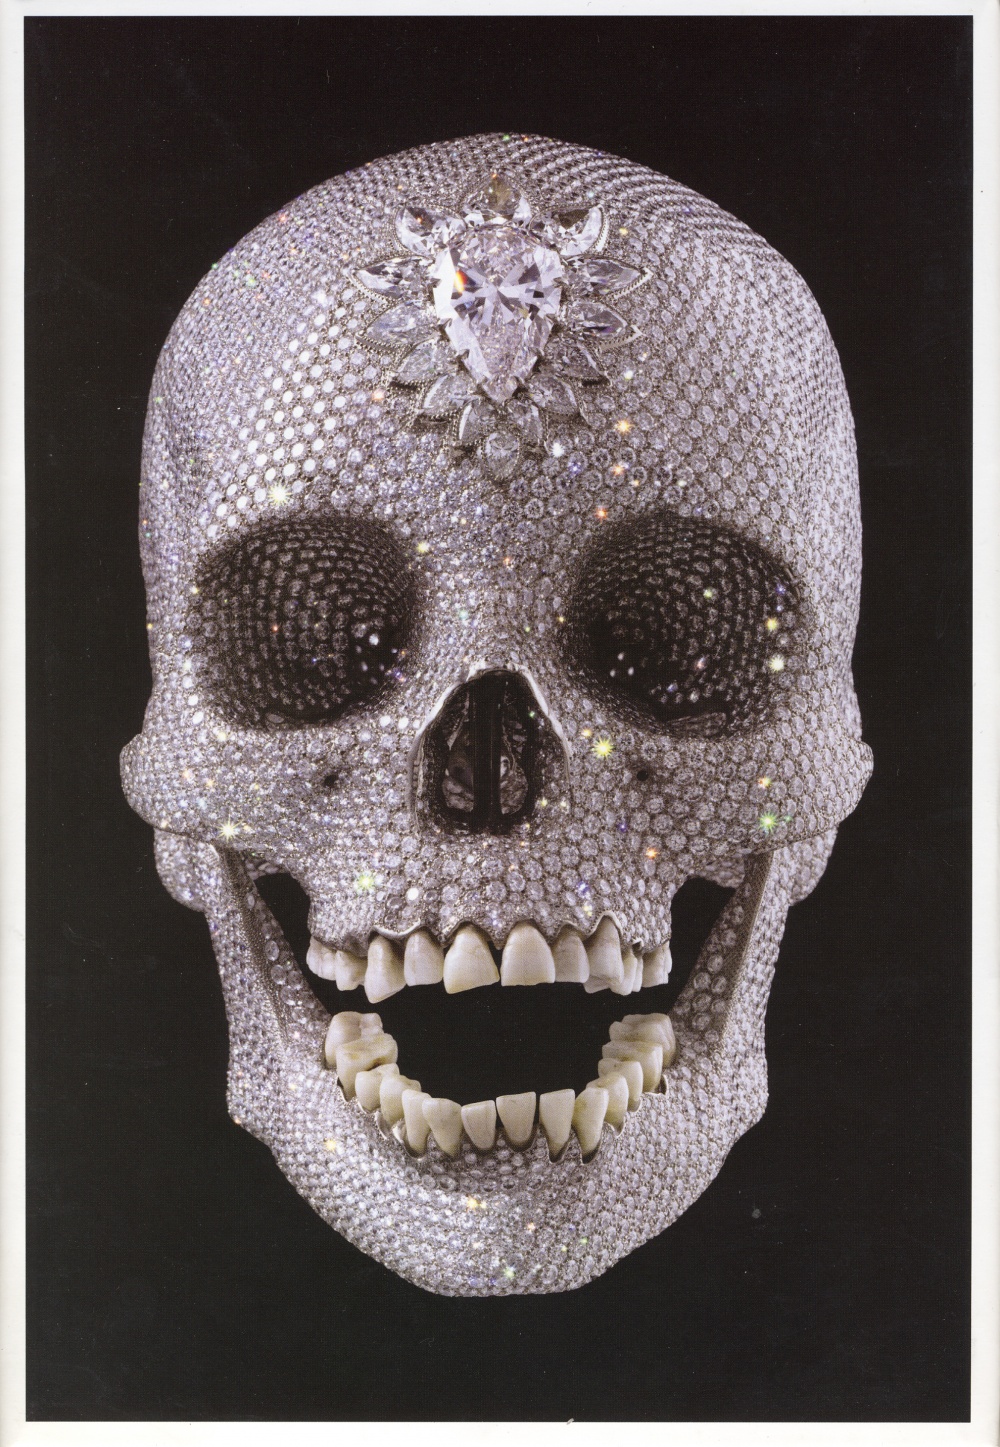 For the Love of God: The Making of the Diamond Skull